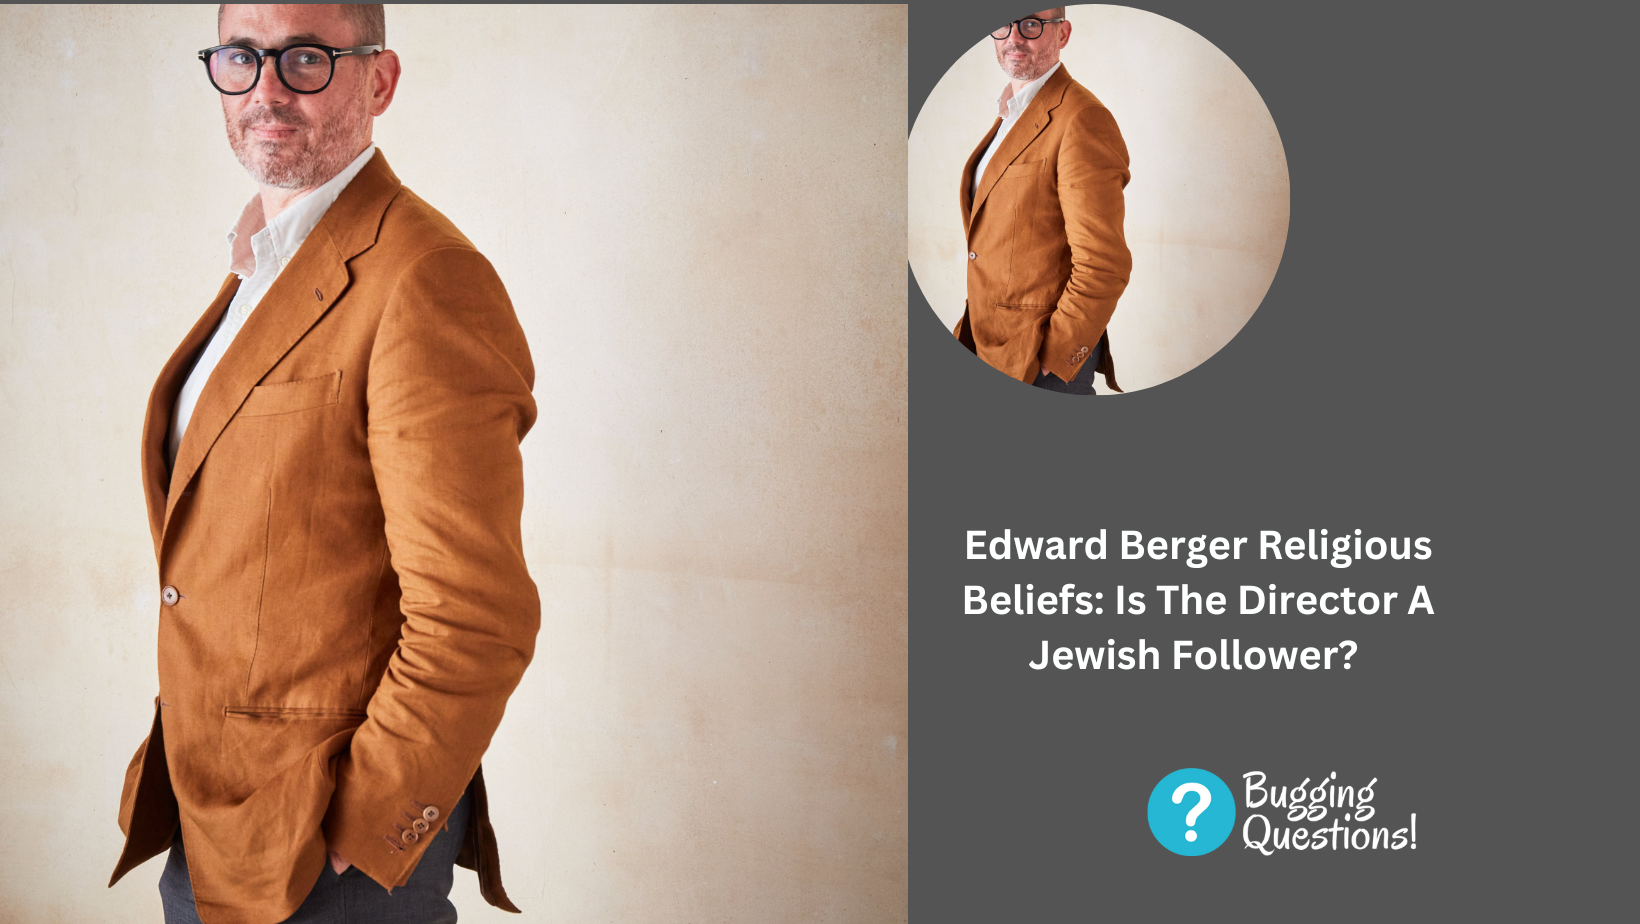 Edward Berger Religious Beliefs: Is The Director A Jewish Follower?